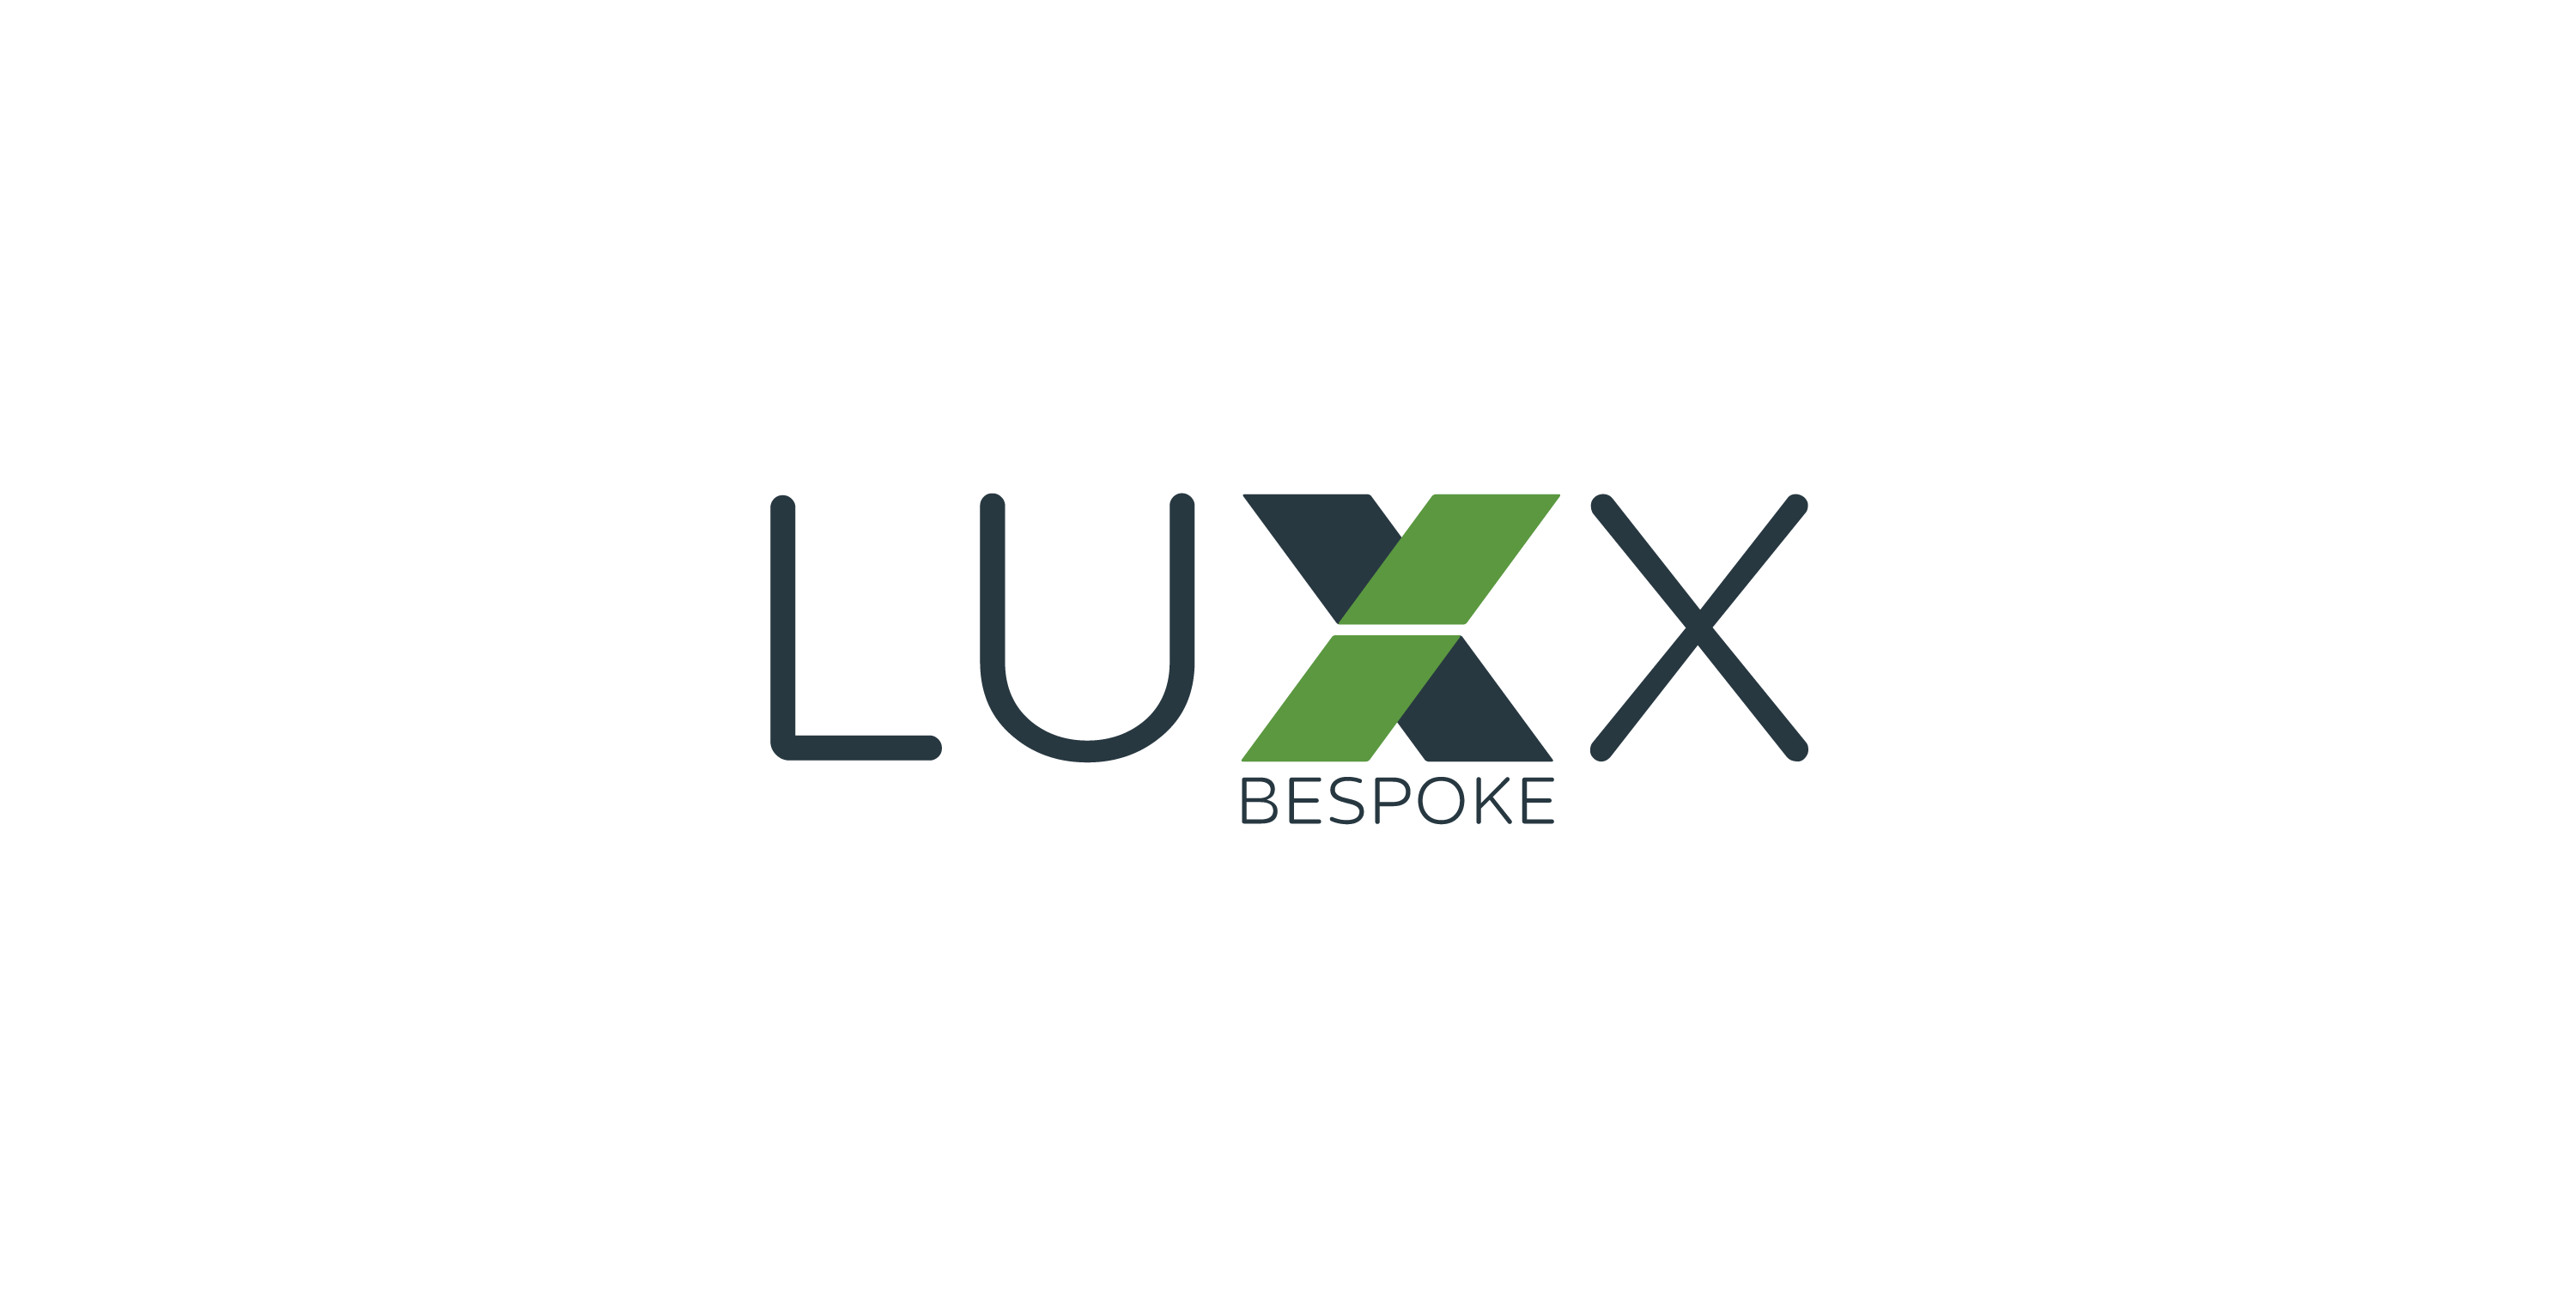 Luxx Bespoke